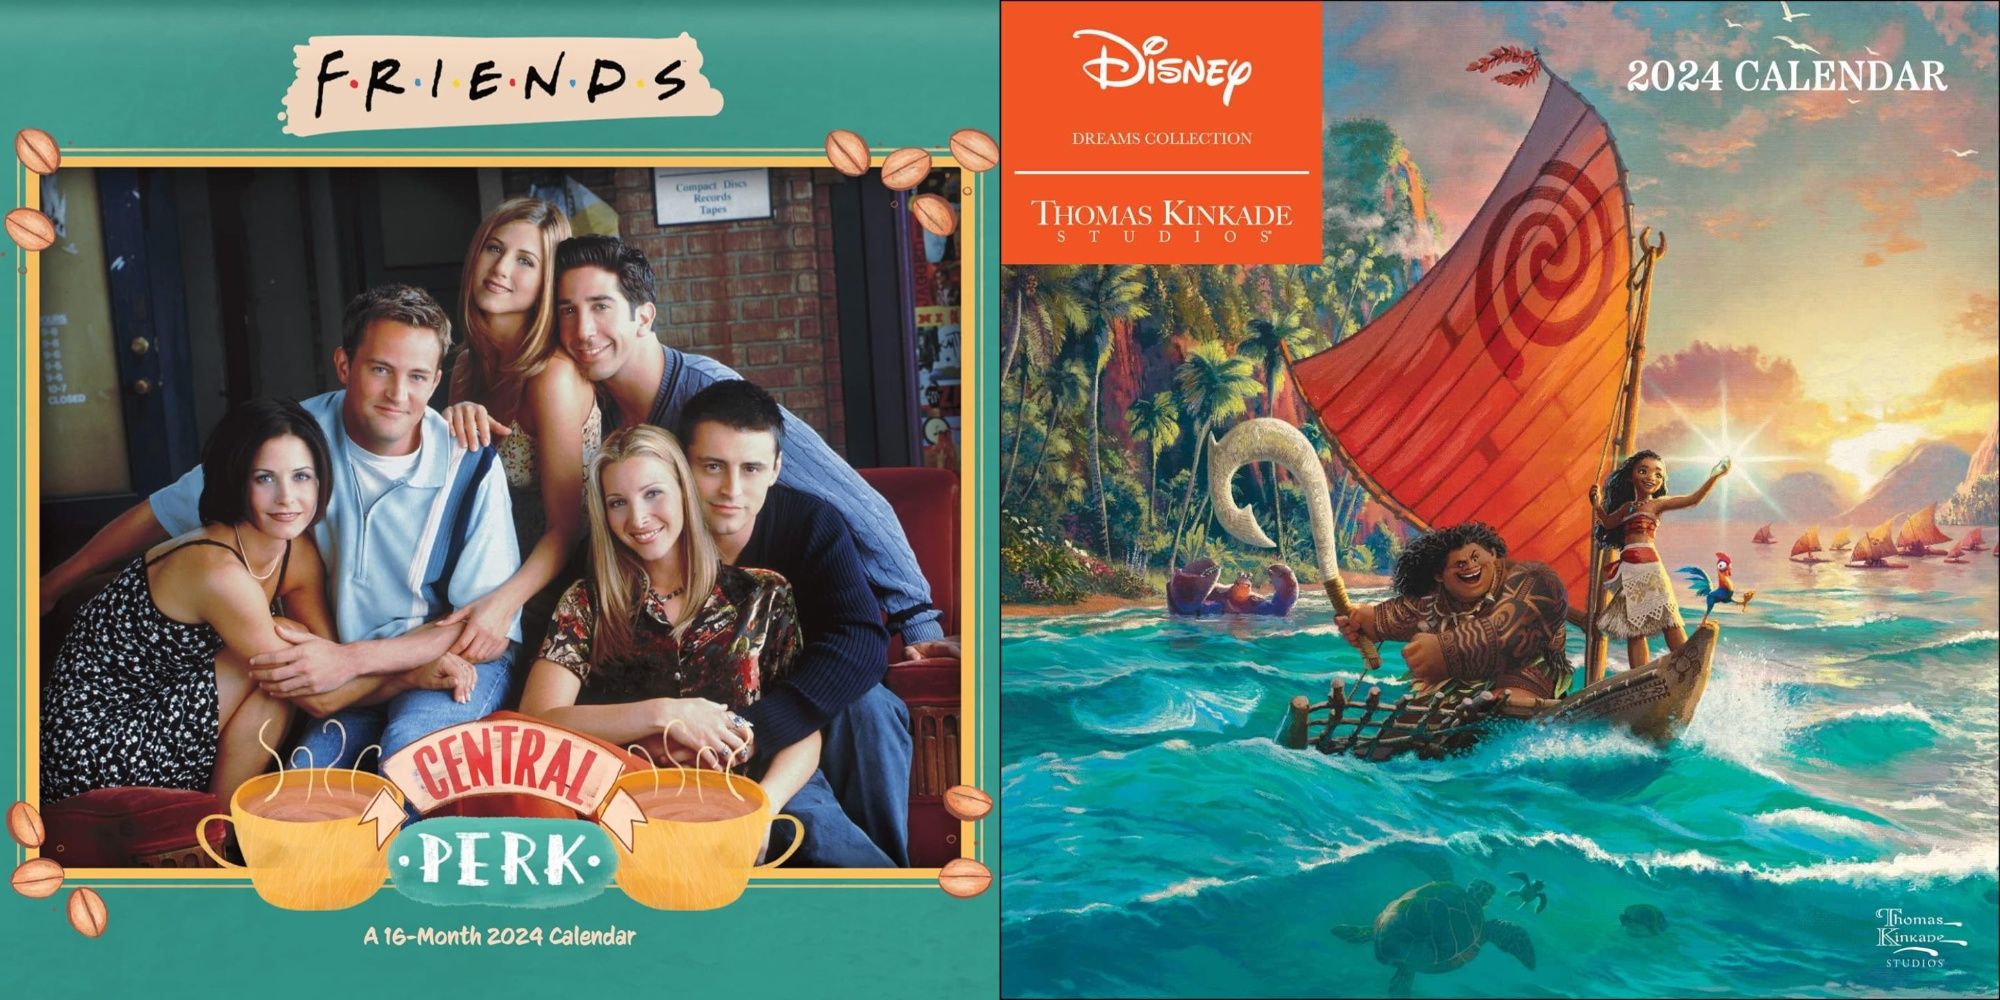 Tv and Movie 2024 Wall Calendars Featured Split Image Of Friends Calendar and Disney Calendar